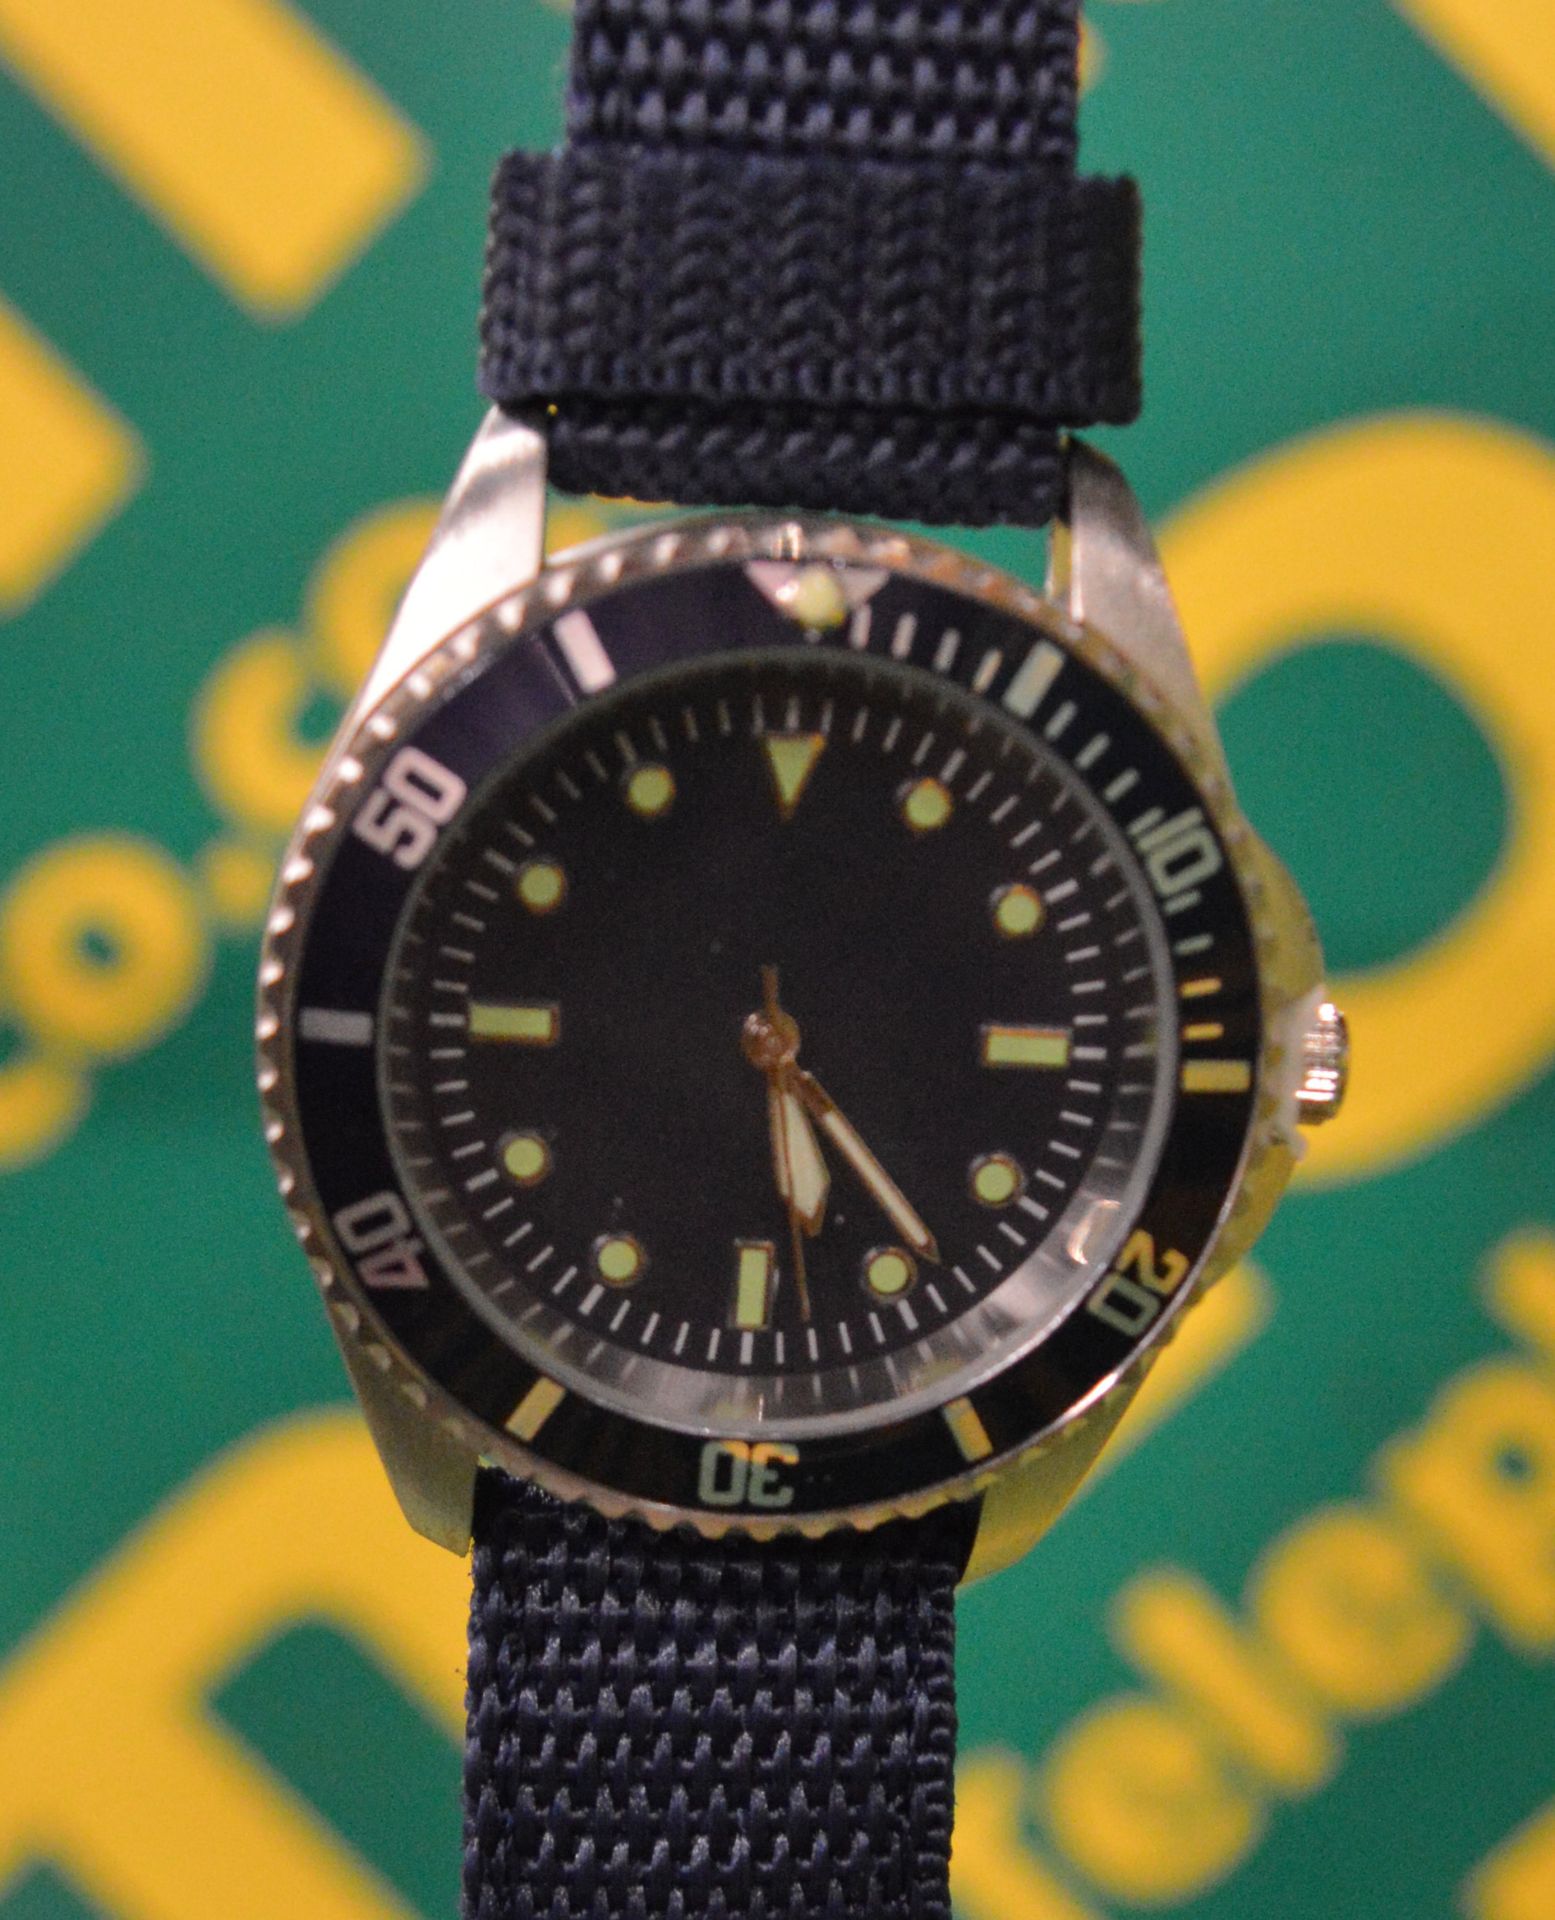 Reproduction Wristwatch - British Commando. - Image 2 of 2